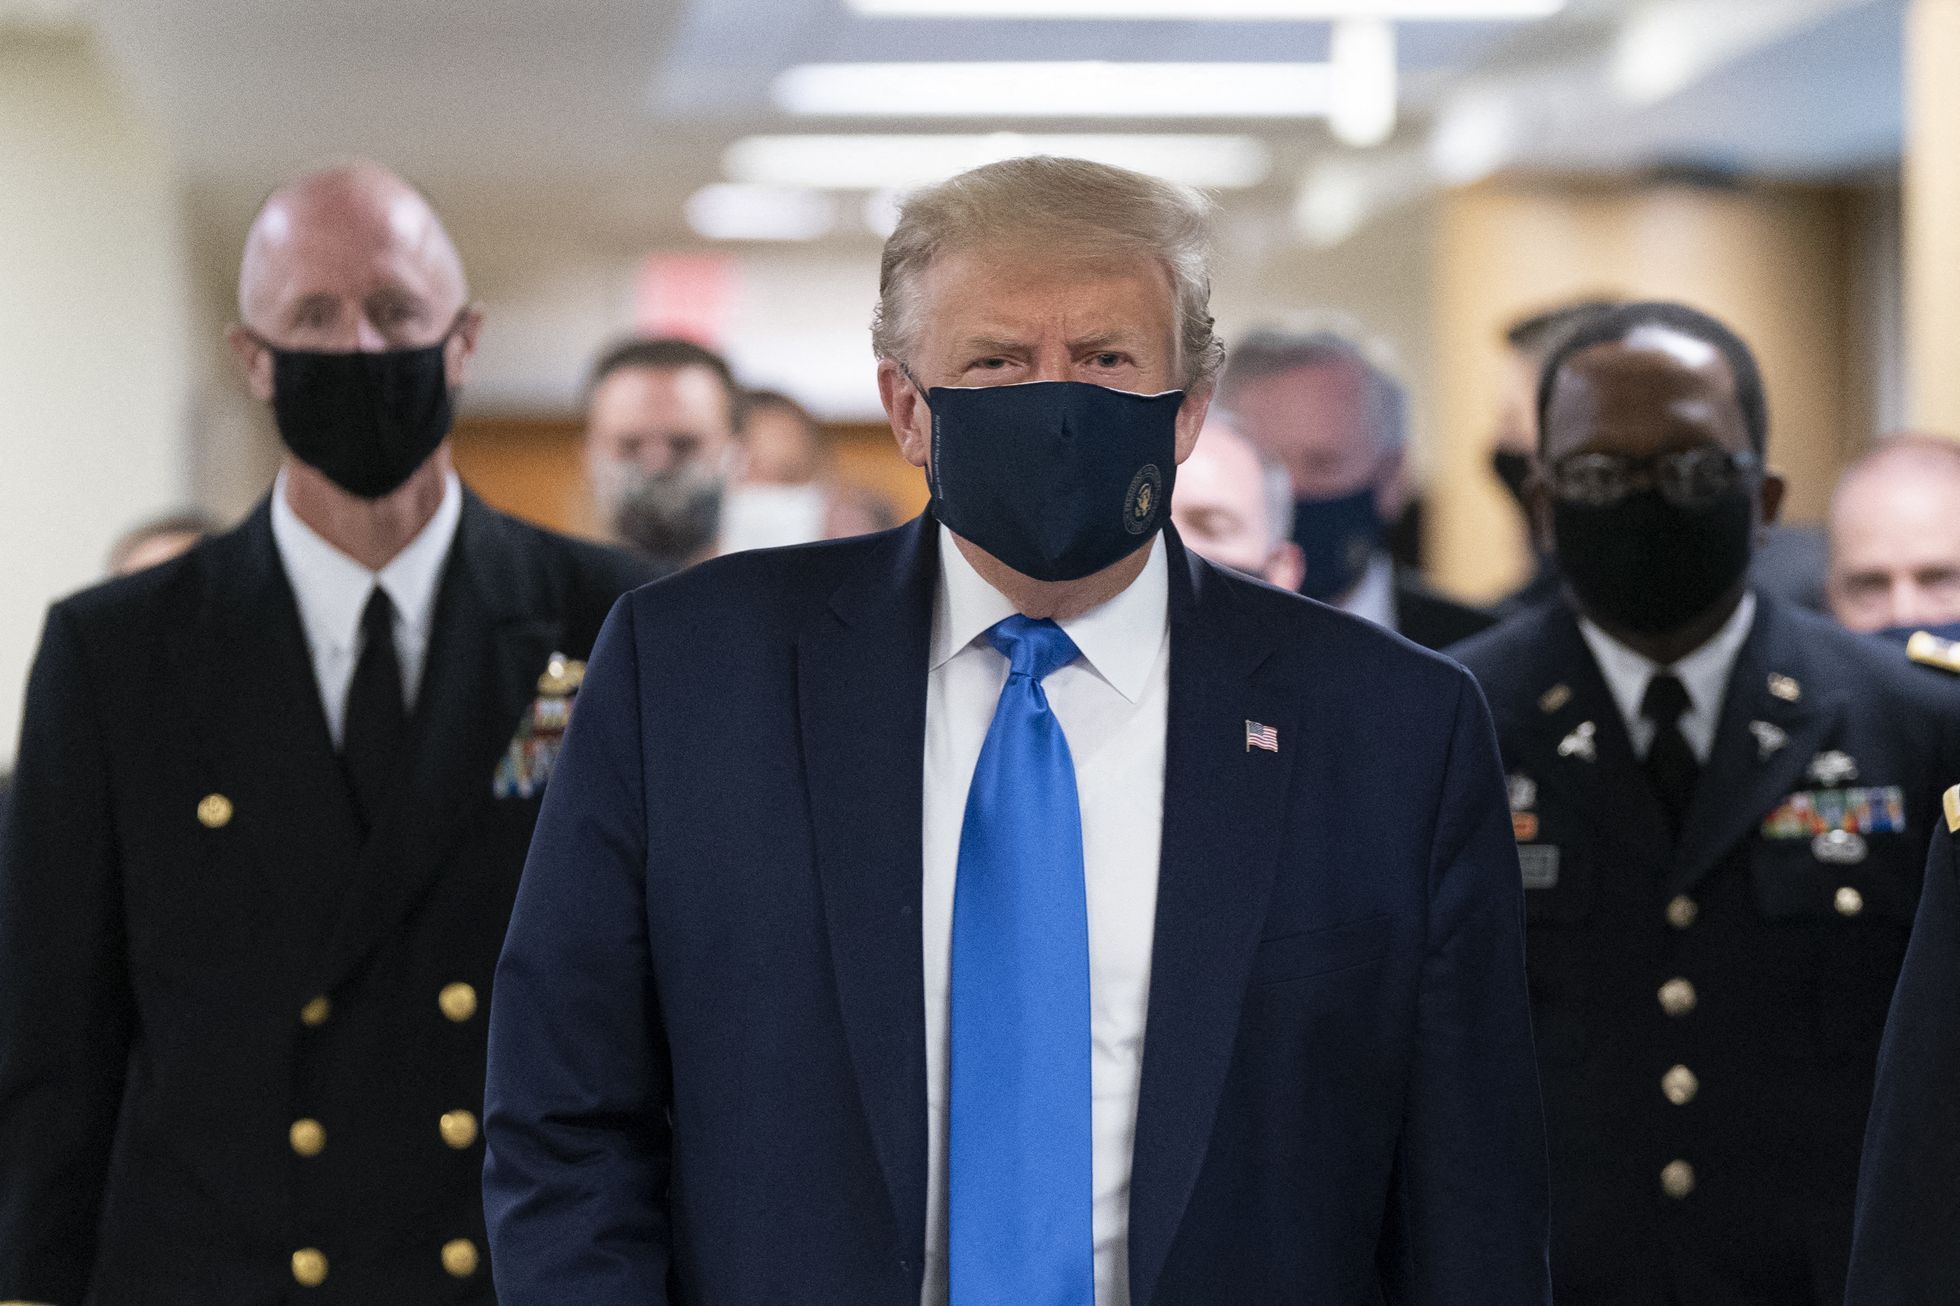 Už i Trumpovi zakryla ústa rouška